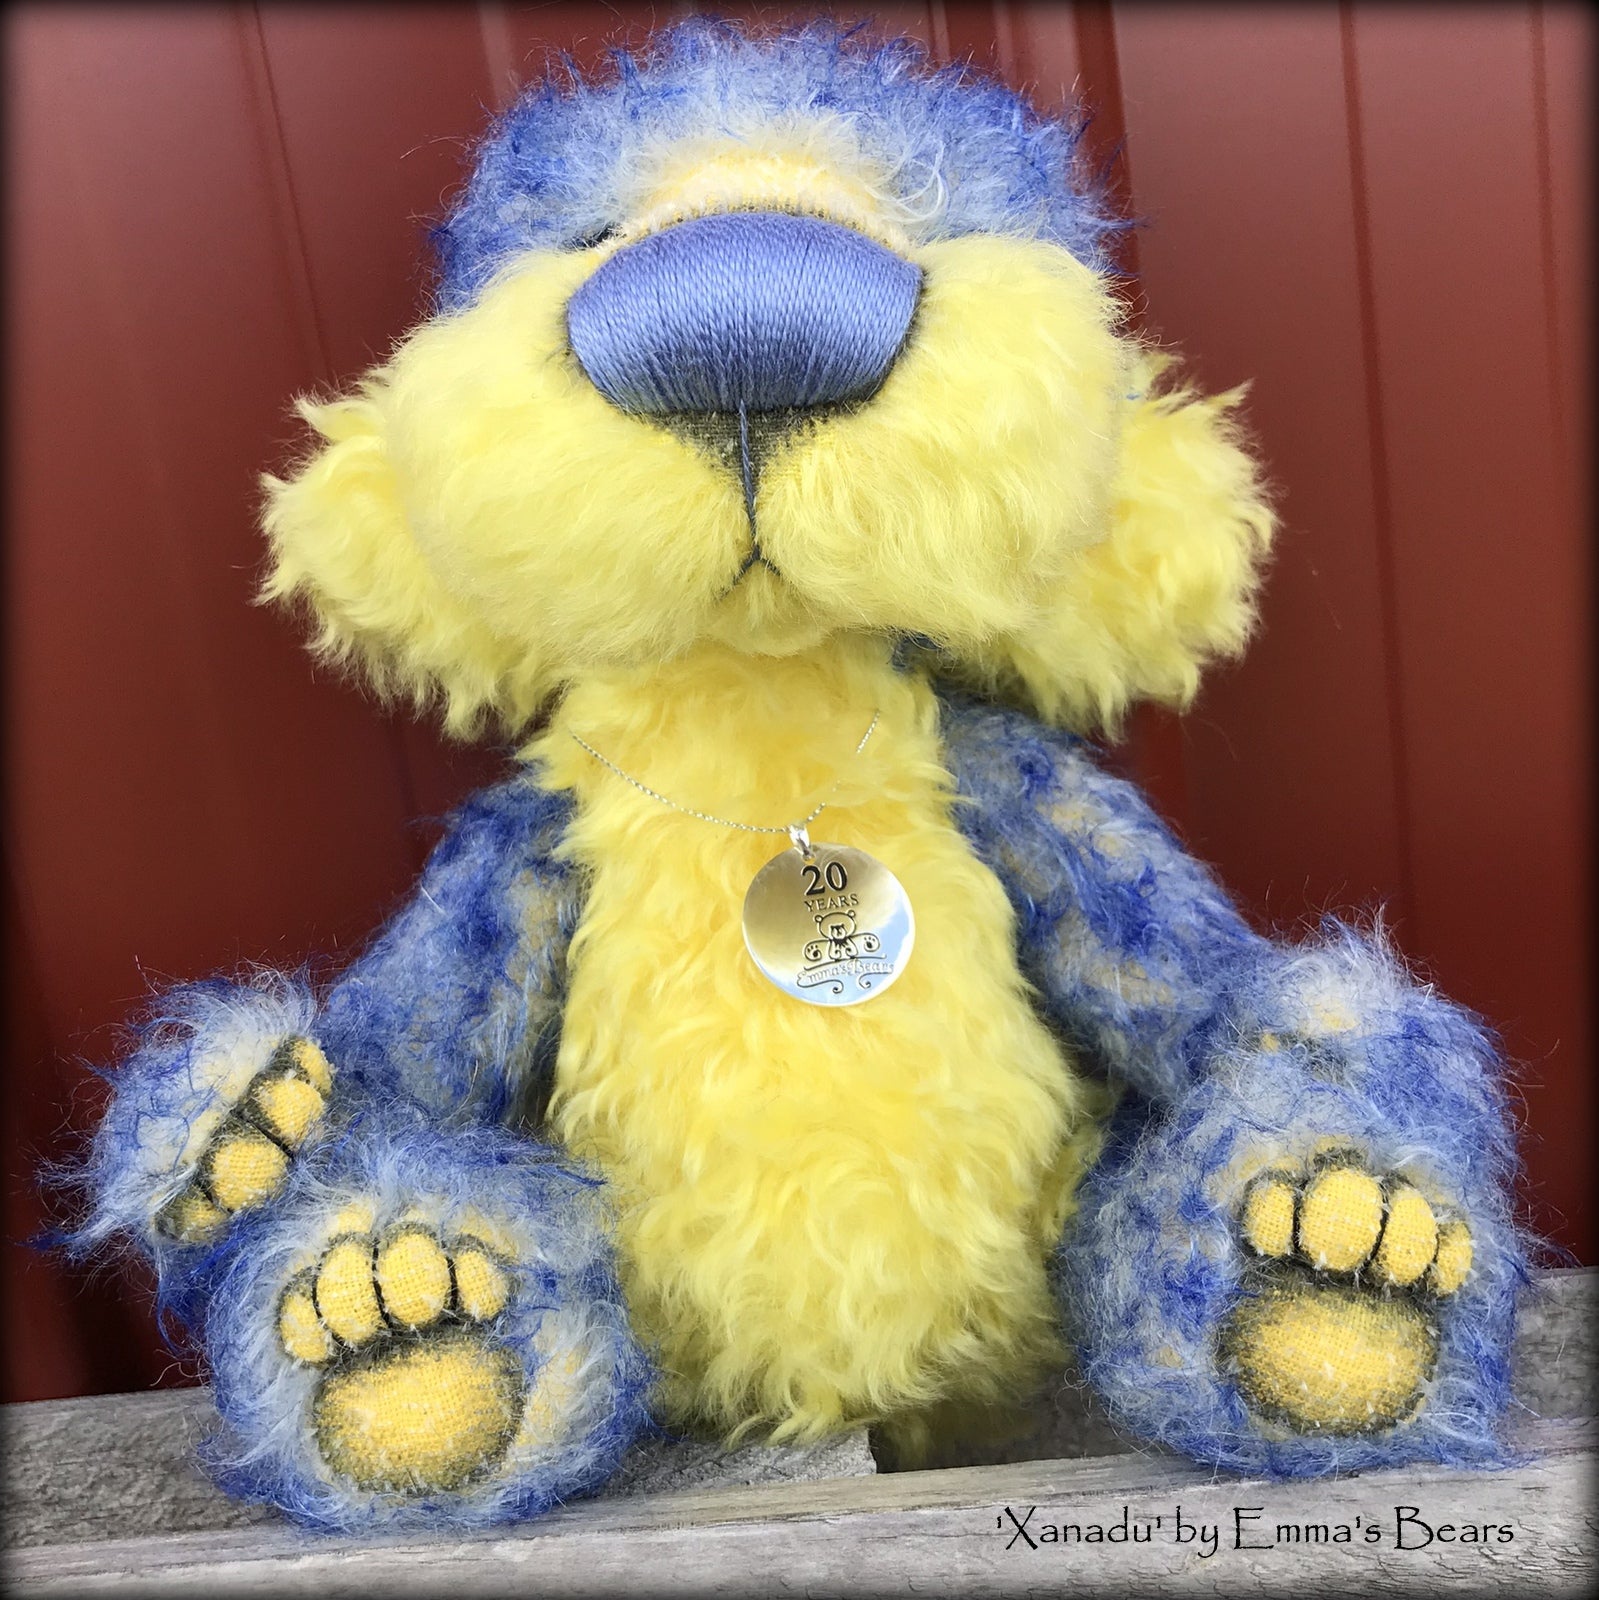 Xanadu - 20 Years of Emma's Bears Commemorative Teddy - OOAK in a series